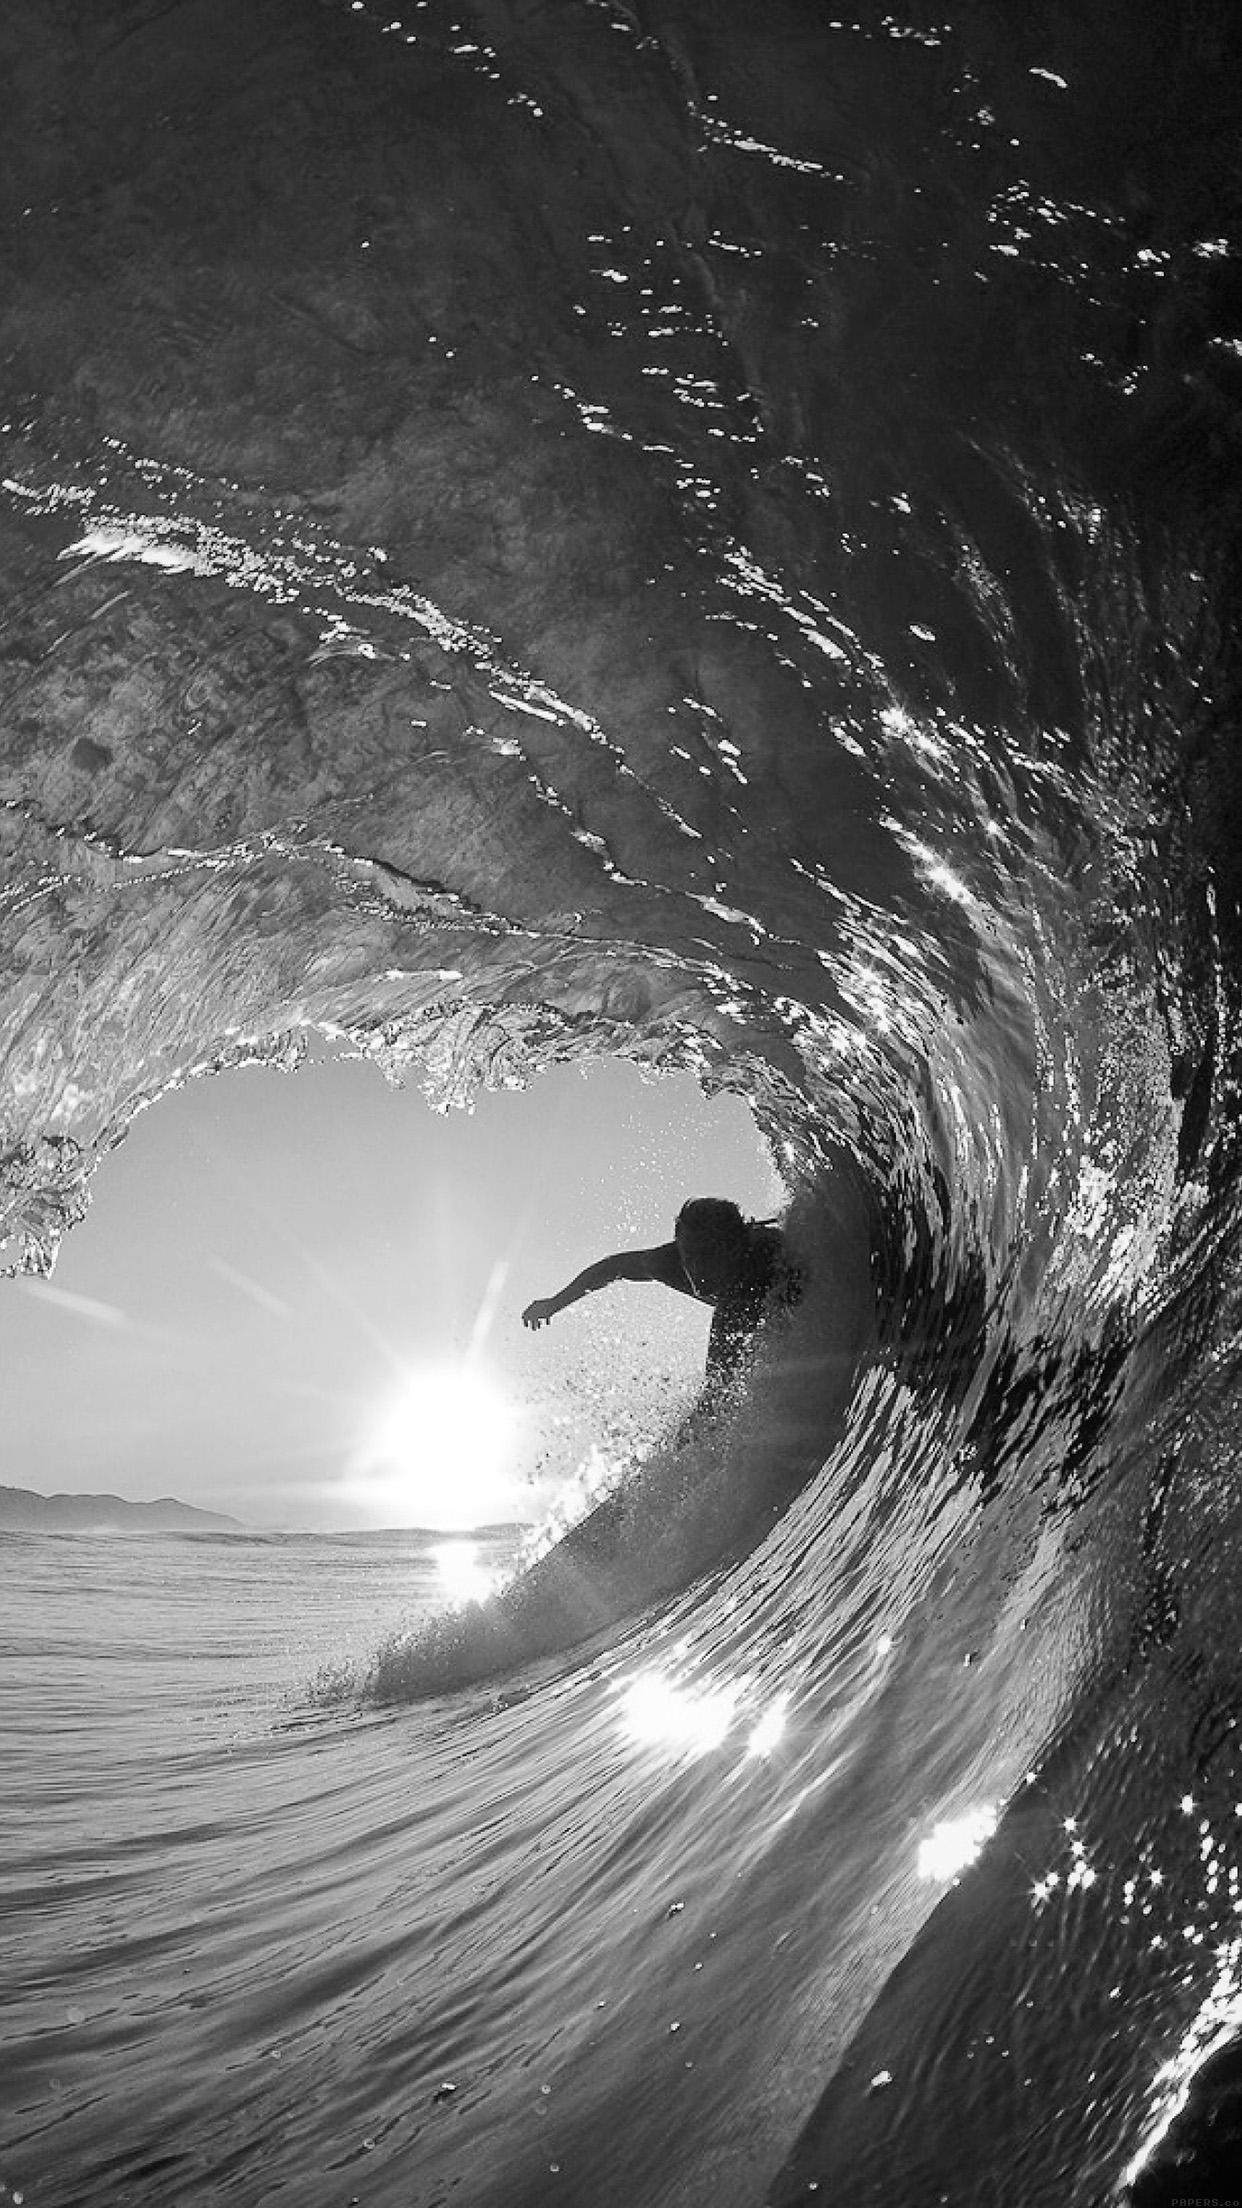 iPhone wallpaper. surf wave sea